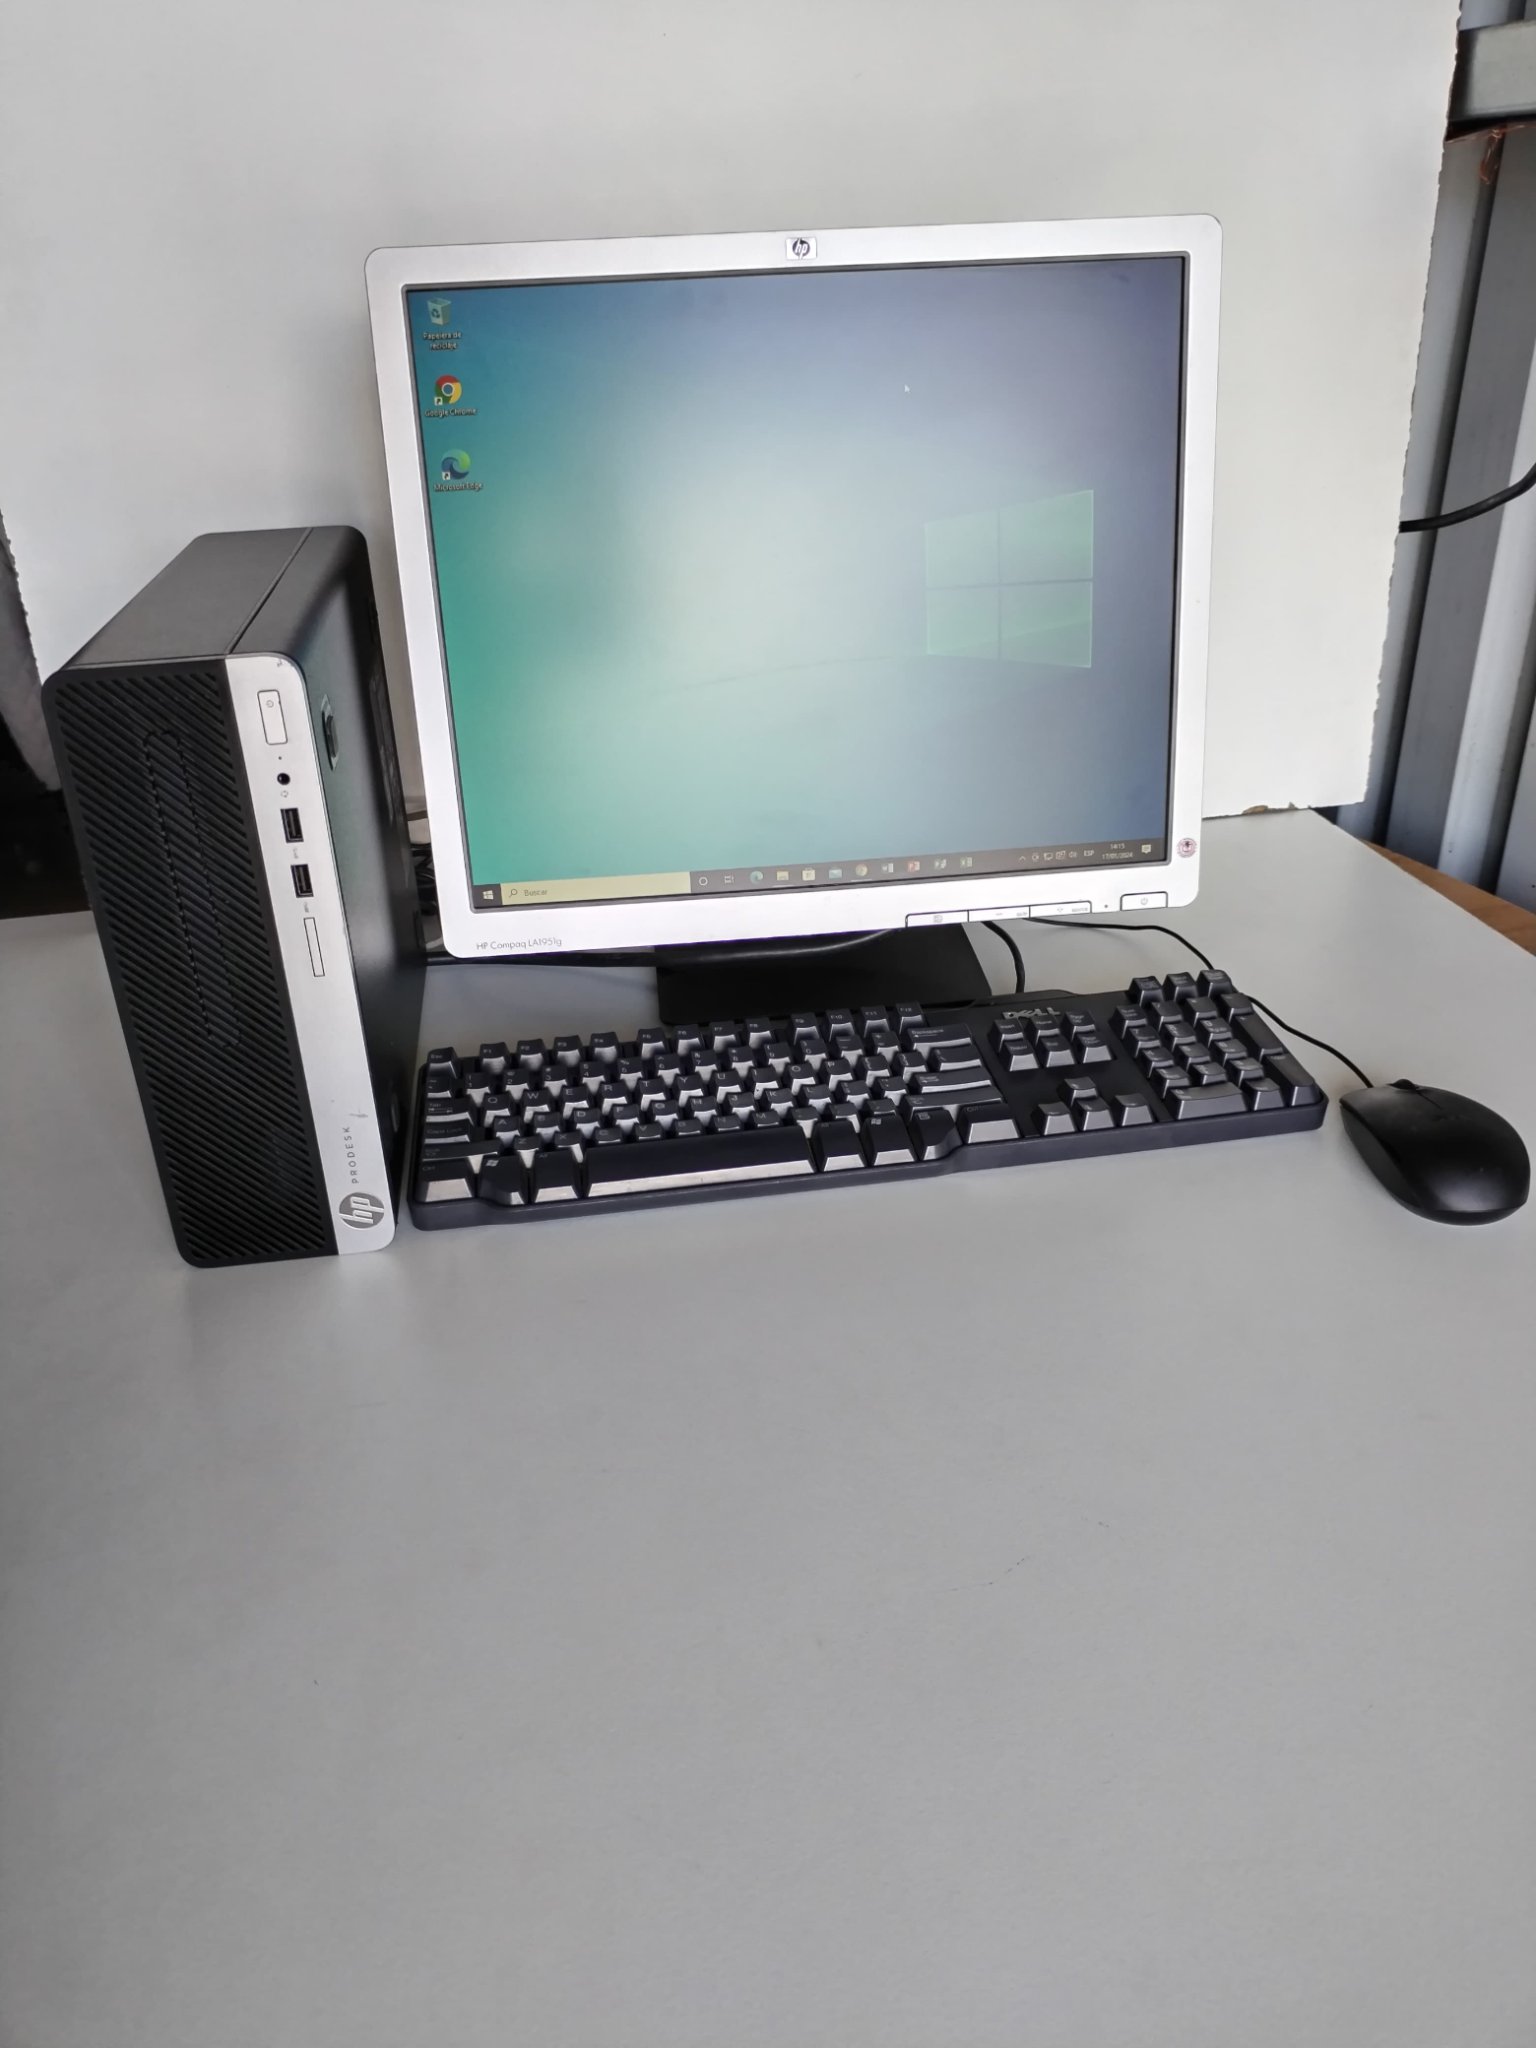 Computadoras de escritorio HP Ci5 7th Gen 
(Precio Q1999.00)

 Características: